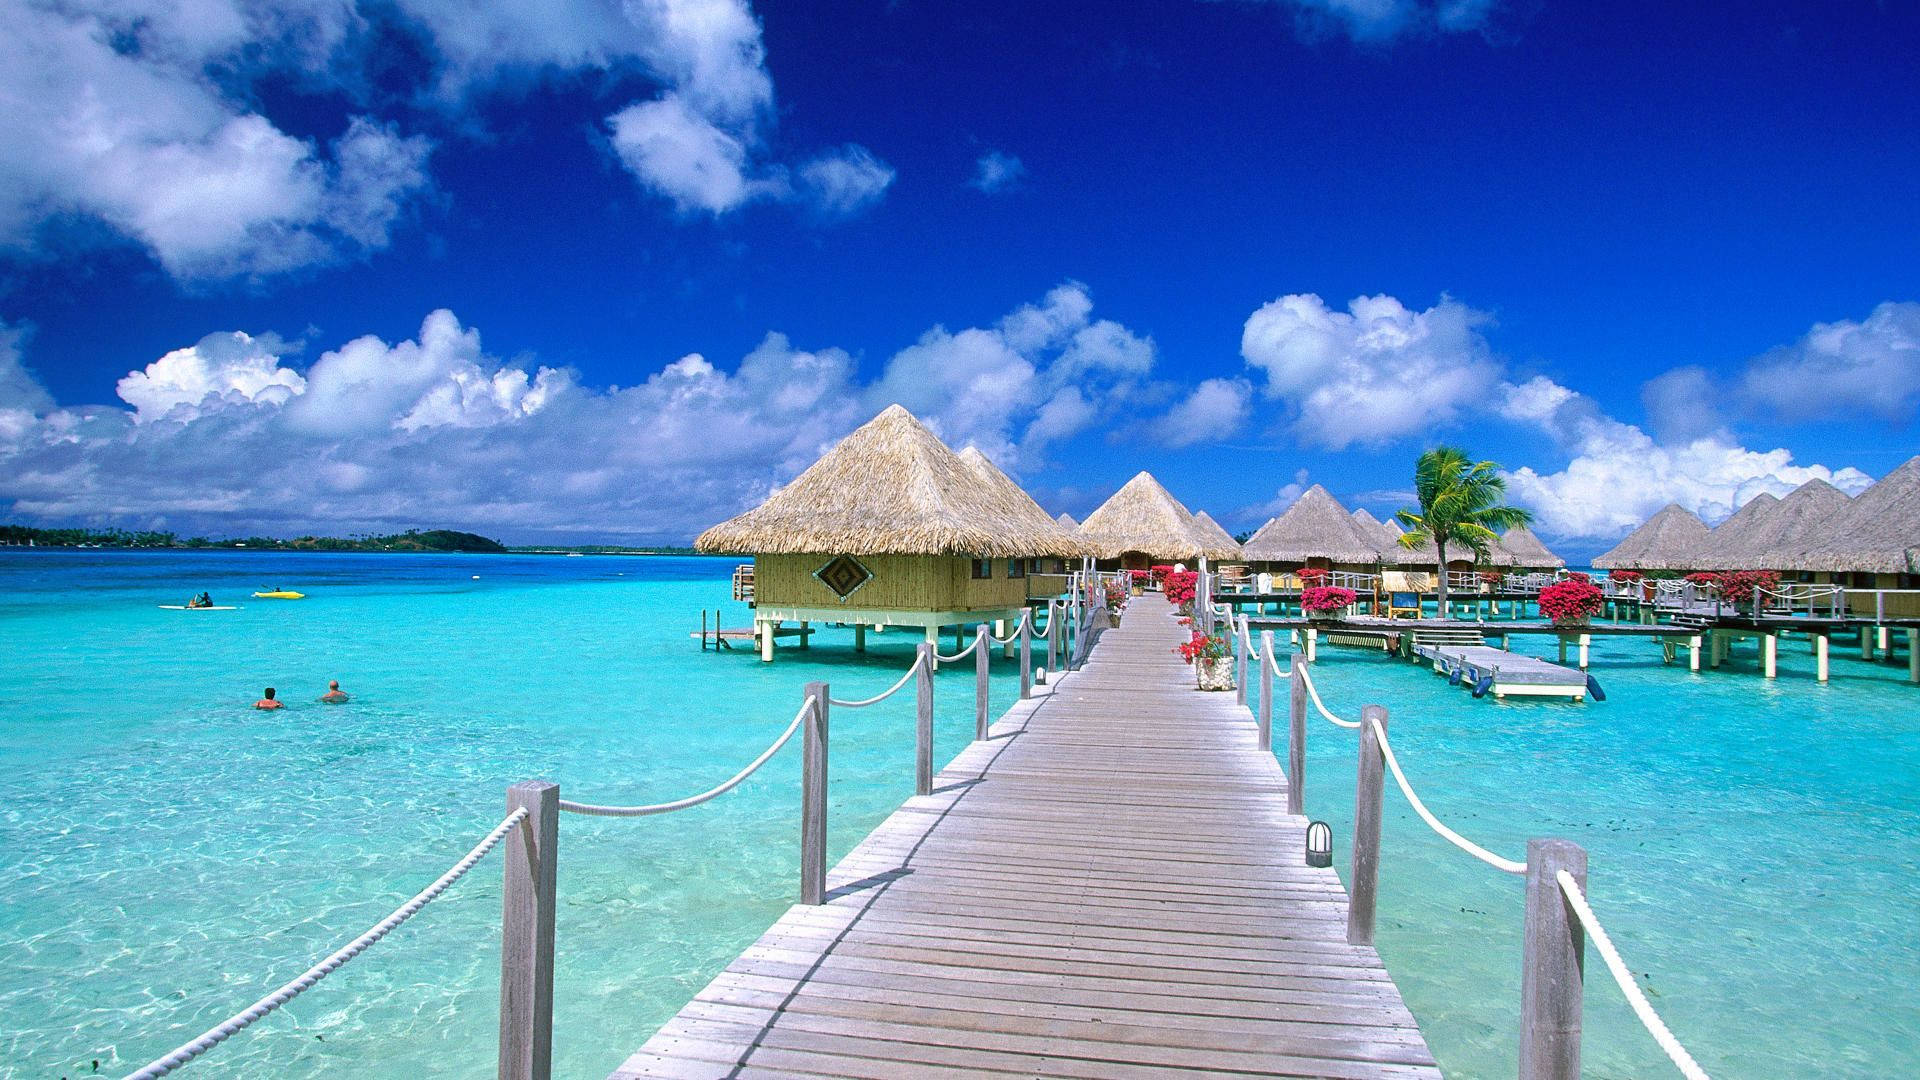 Nipa Huts On Beach In Maldives Desktop